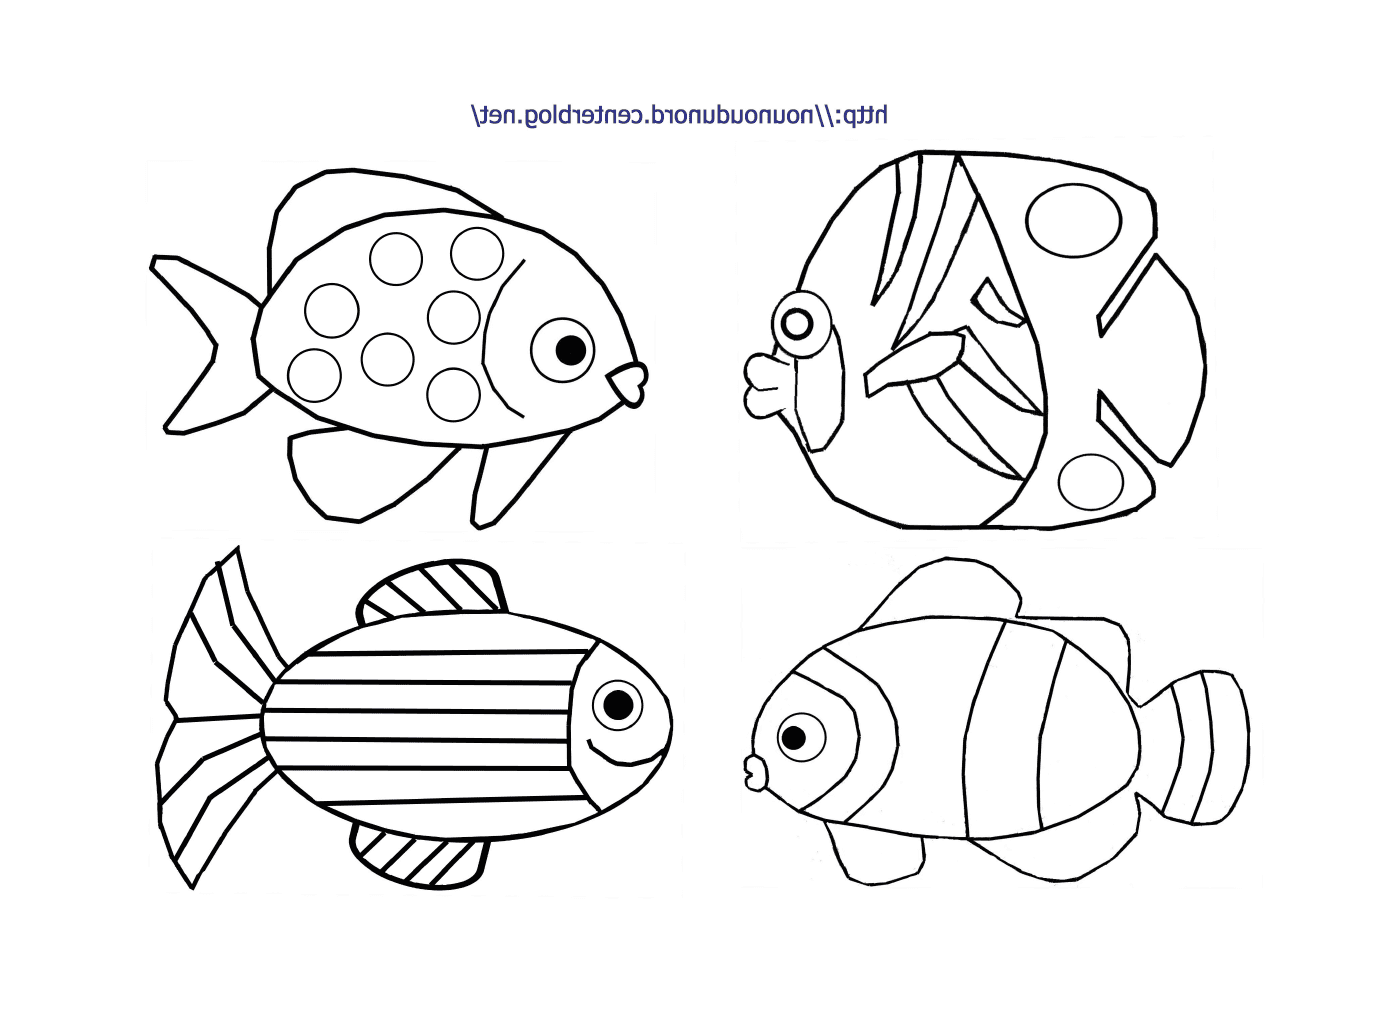  Grupo de cuatro peces diferentes 